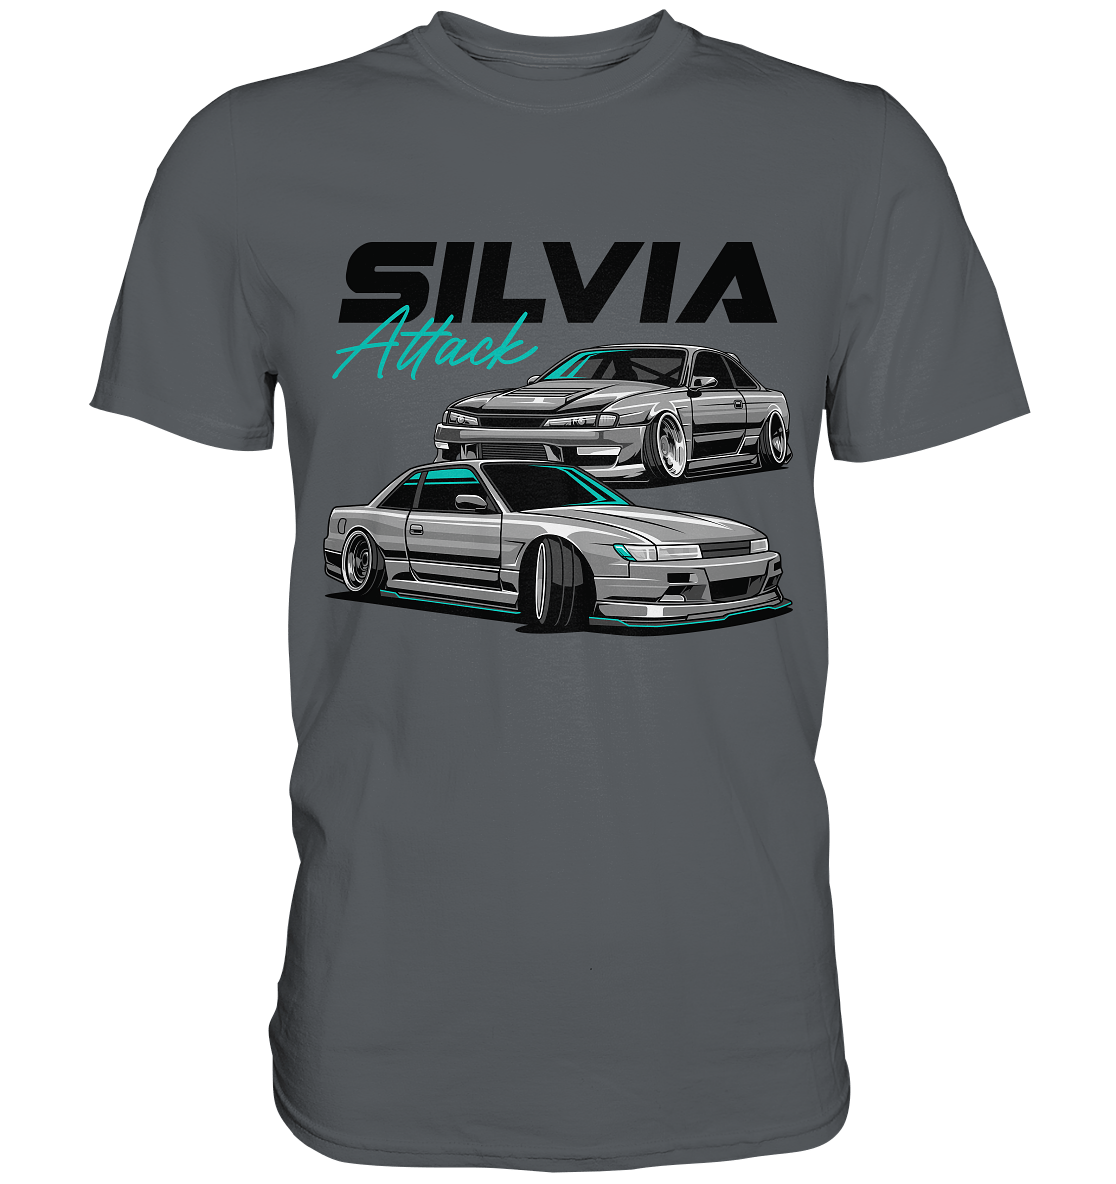 Silvia Attack - Premium Shirt - MotoMerch.de